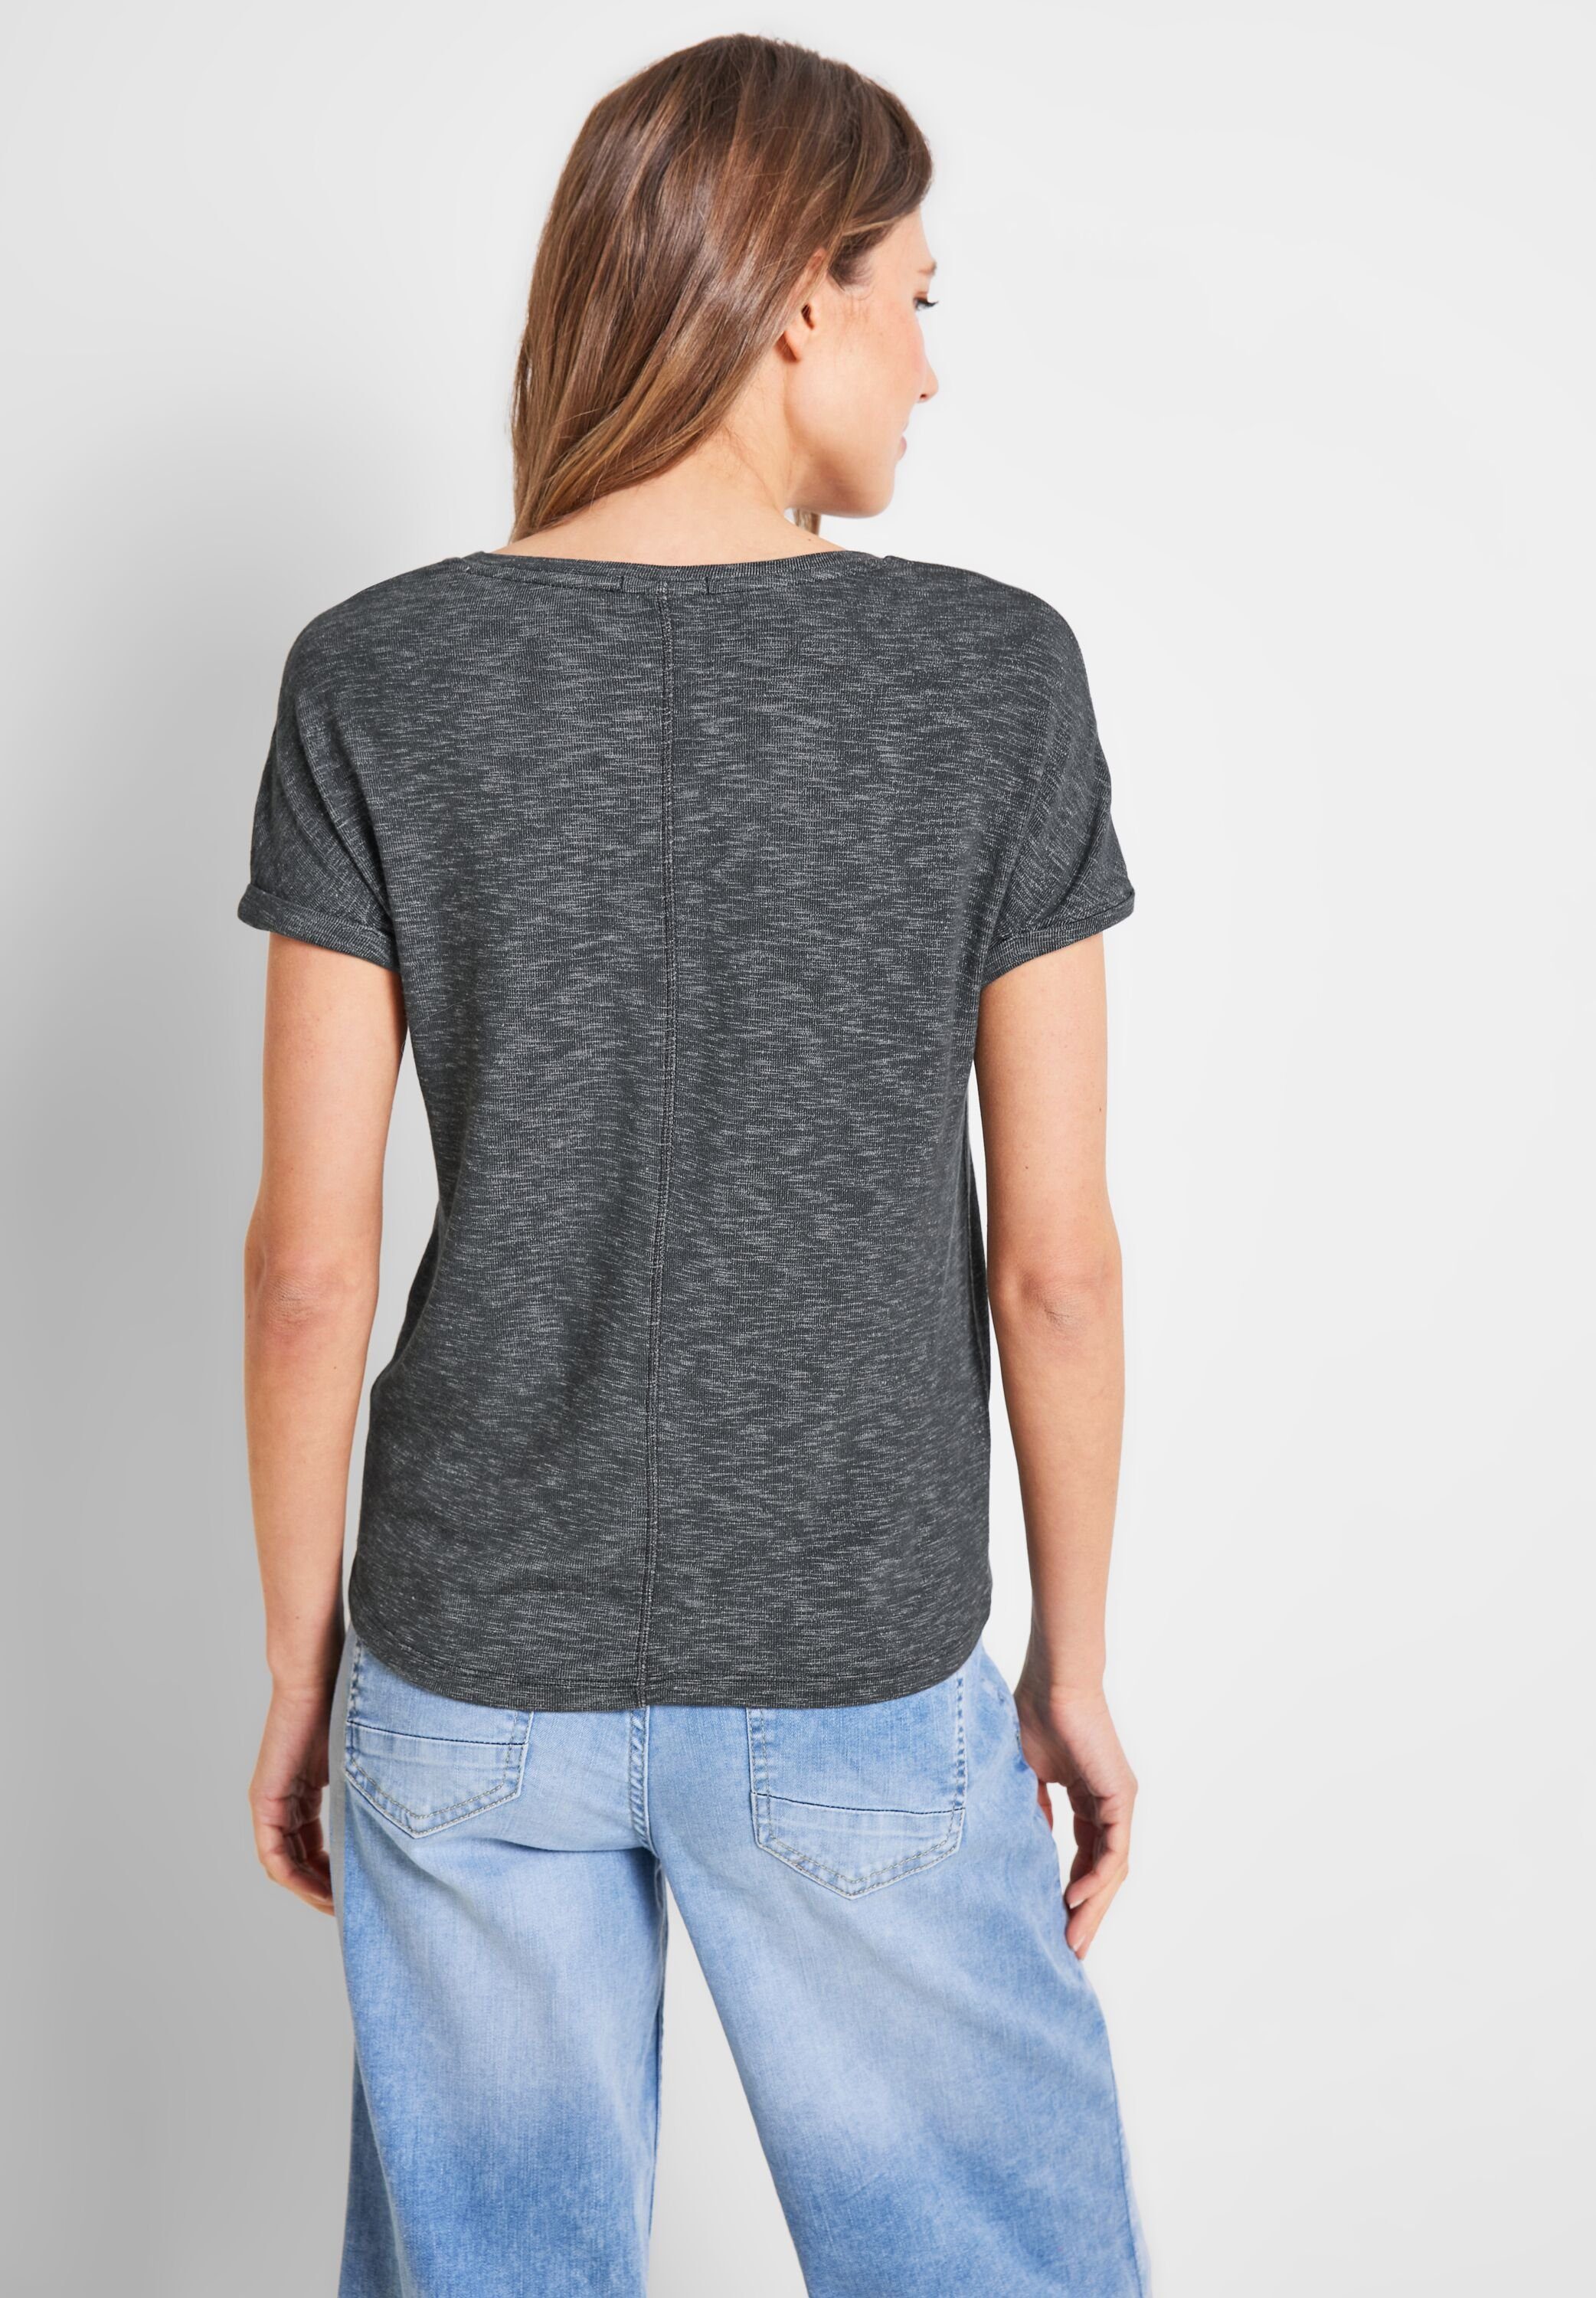 Cecil T-Shirt khaki V-Ausschnitt melange easy mit abgerundetem